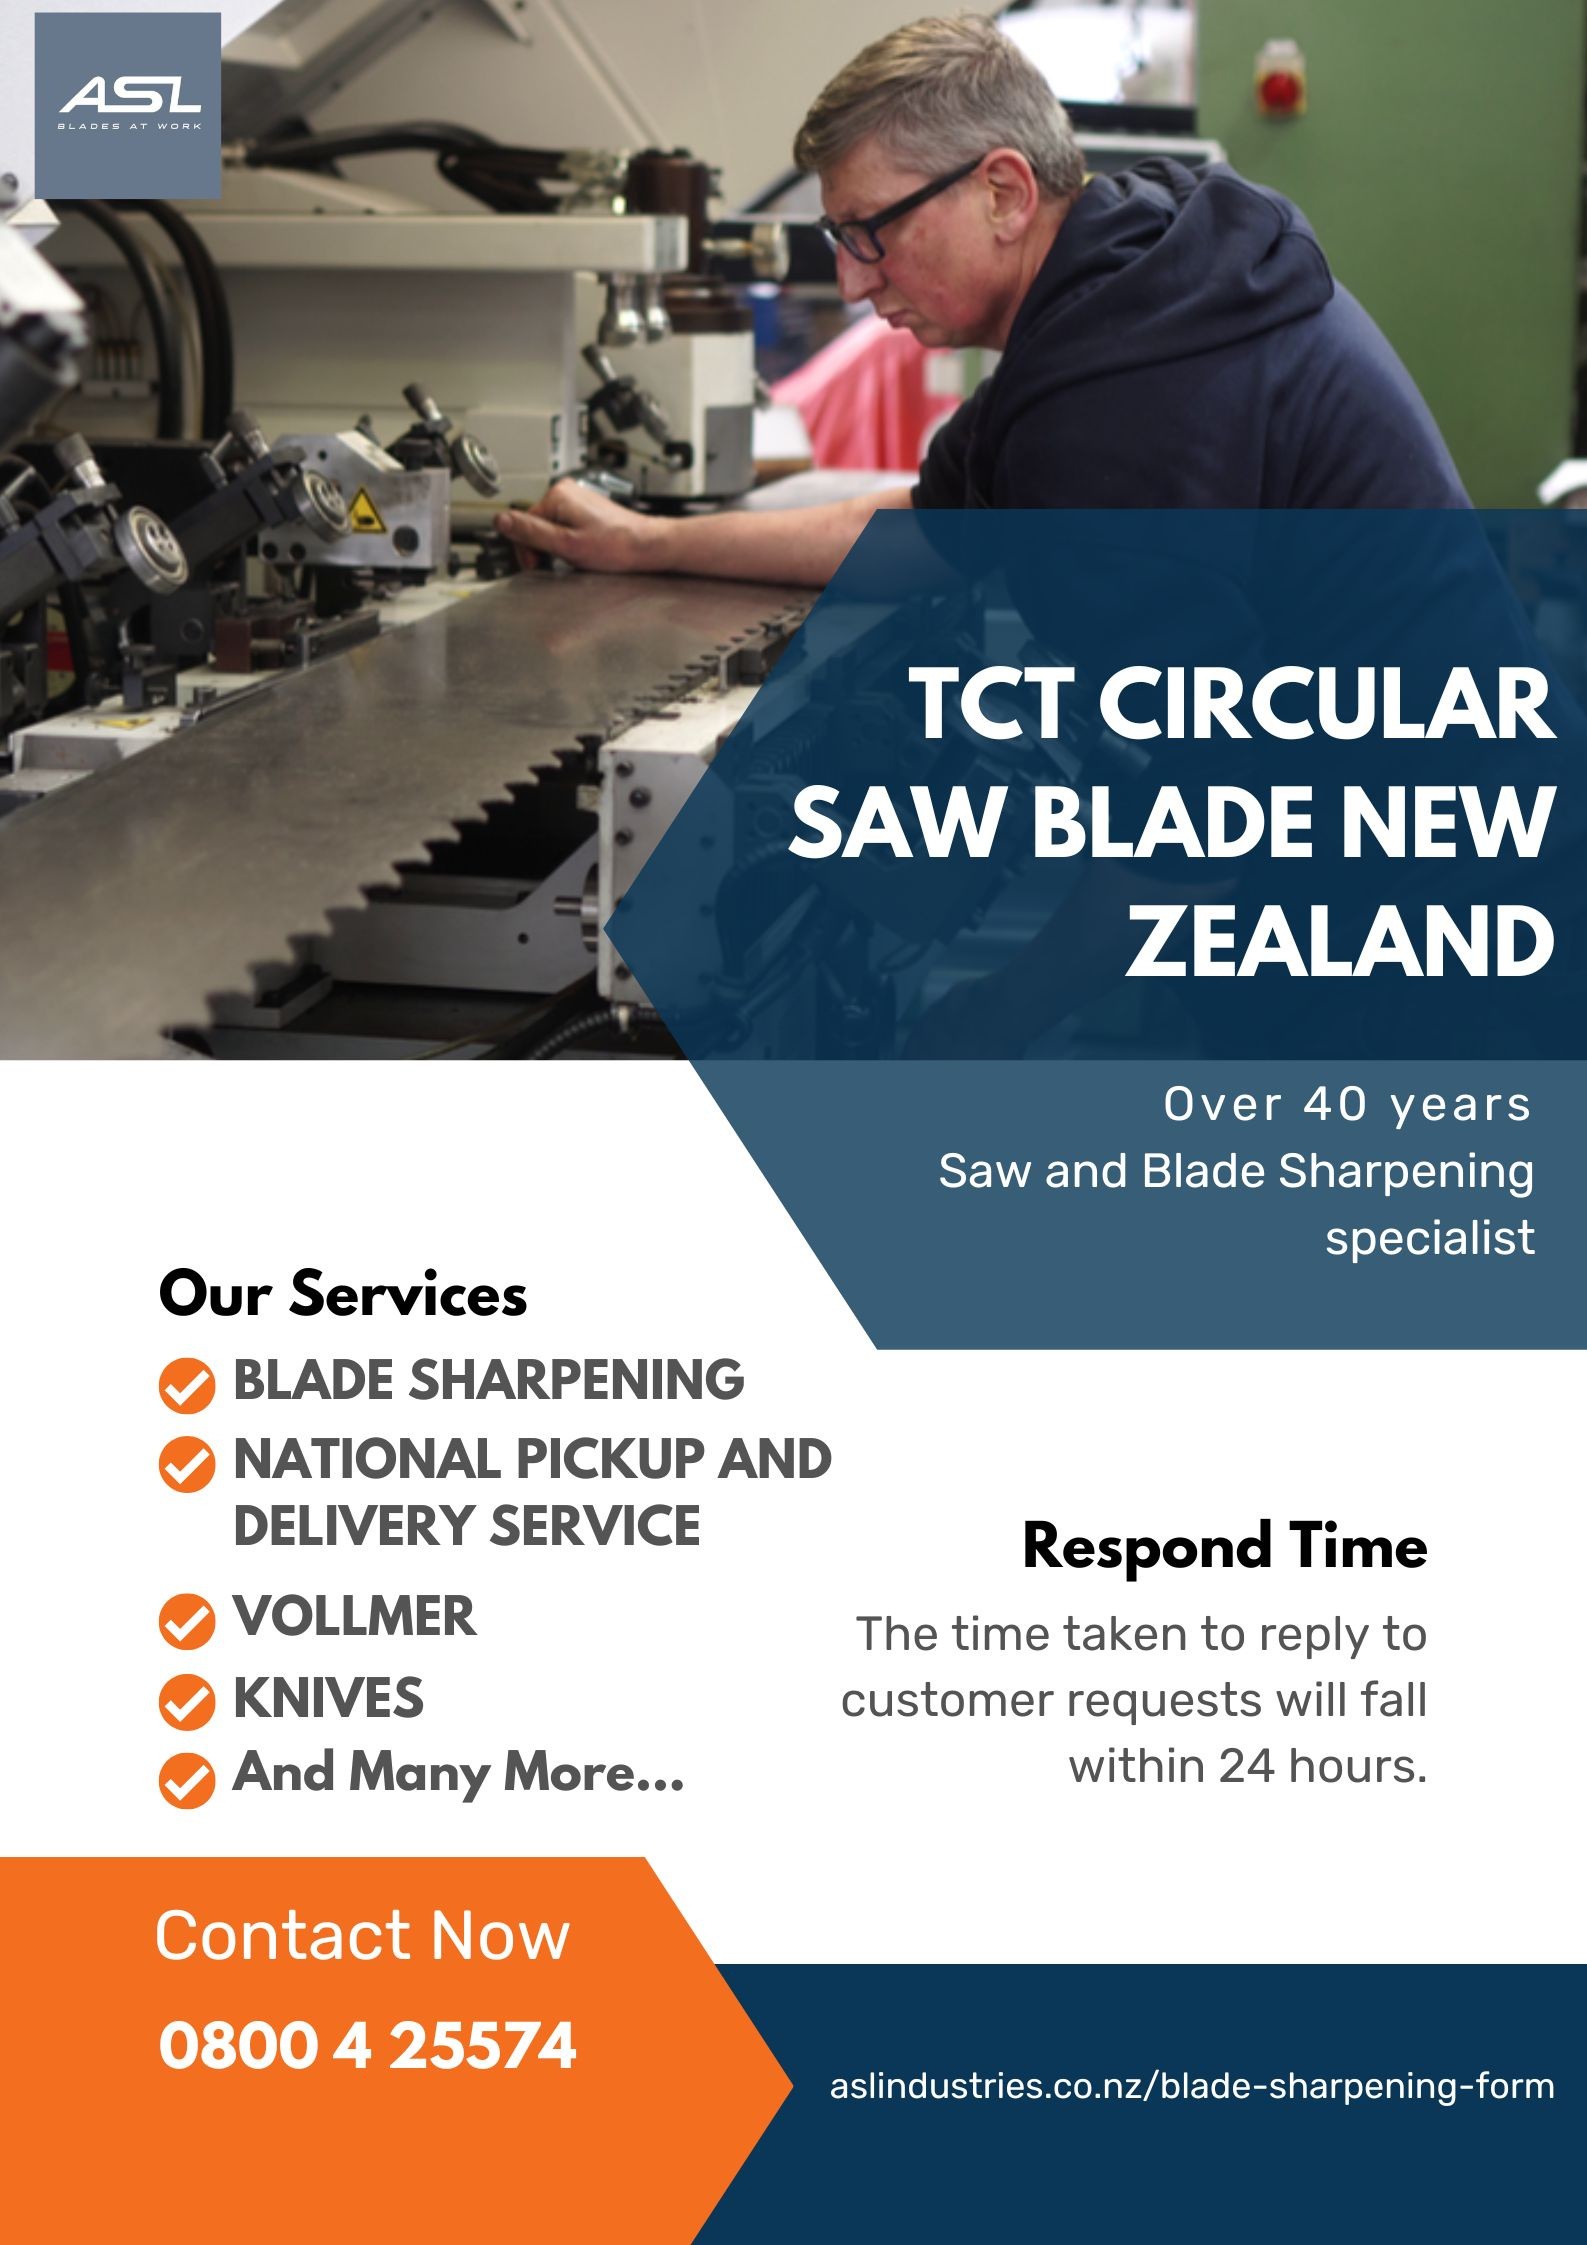 TCT Circular Saw Blade New Zealand by ASL Industries Ltd on Dribbble